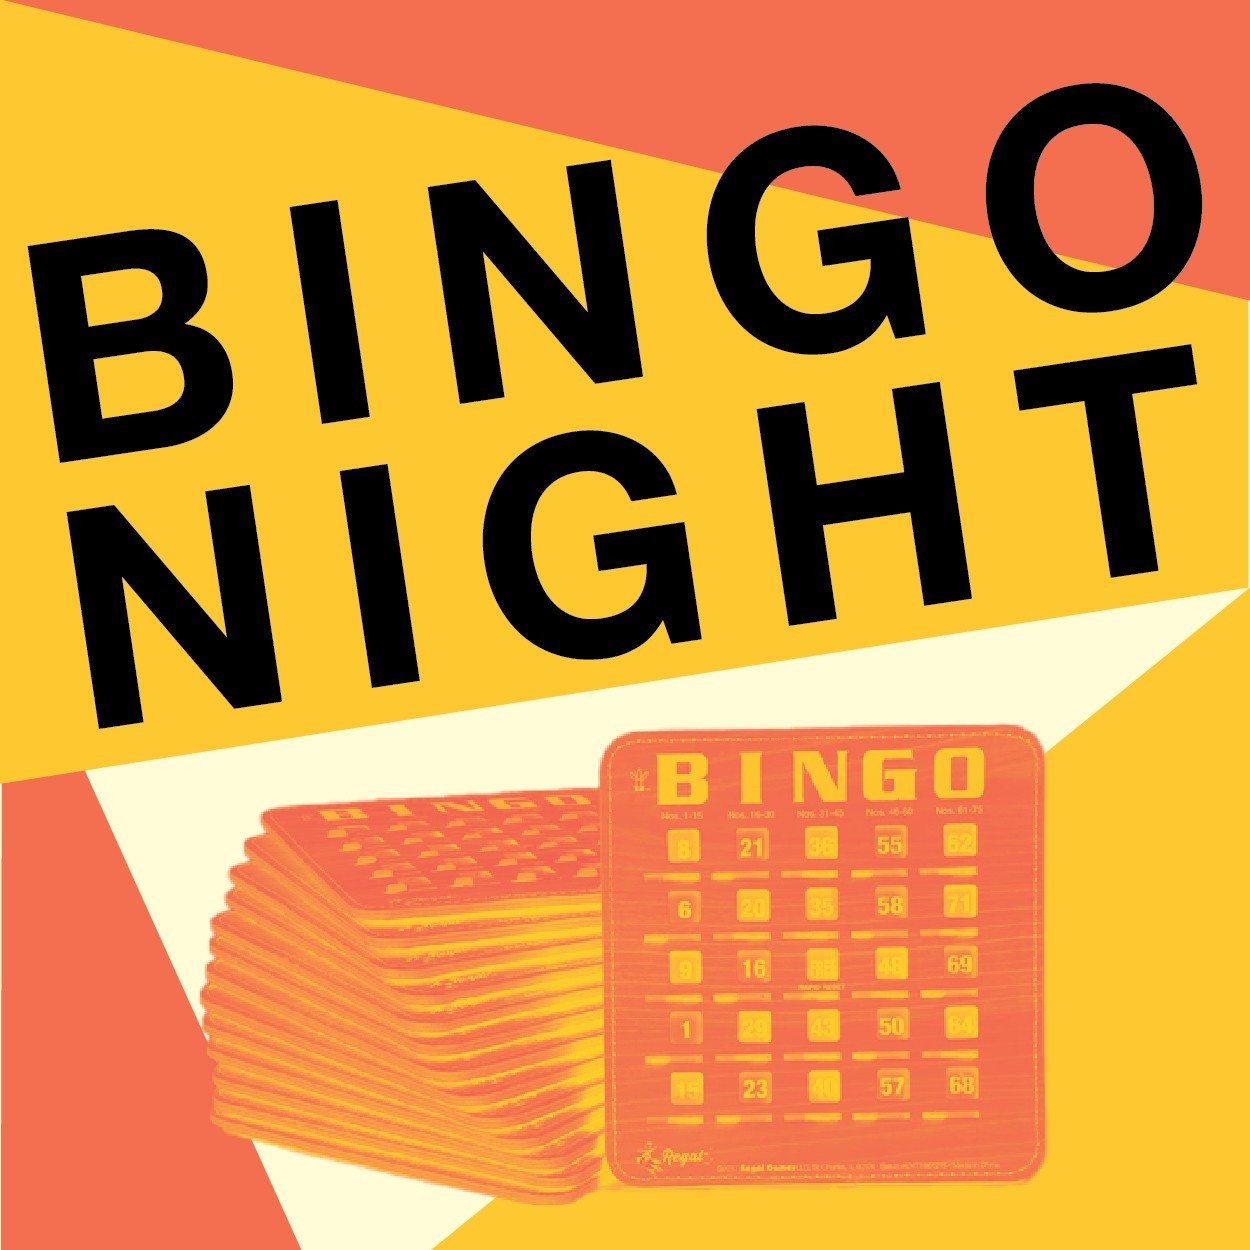 Bingo Night is October 7 in the Nebraska Union's Swanson Auditorium. 